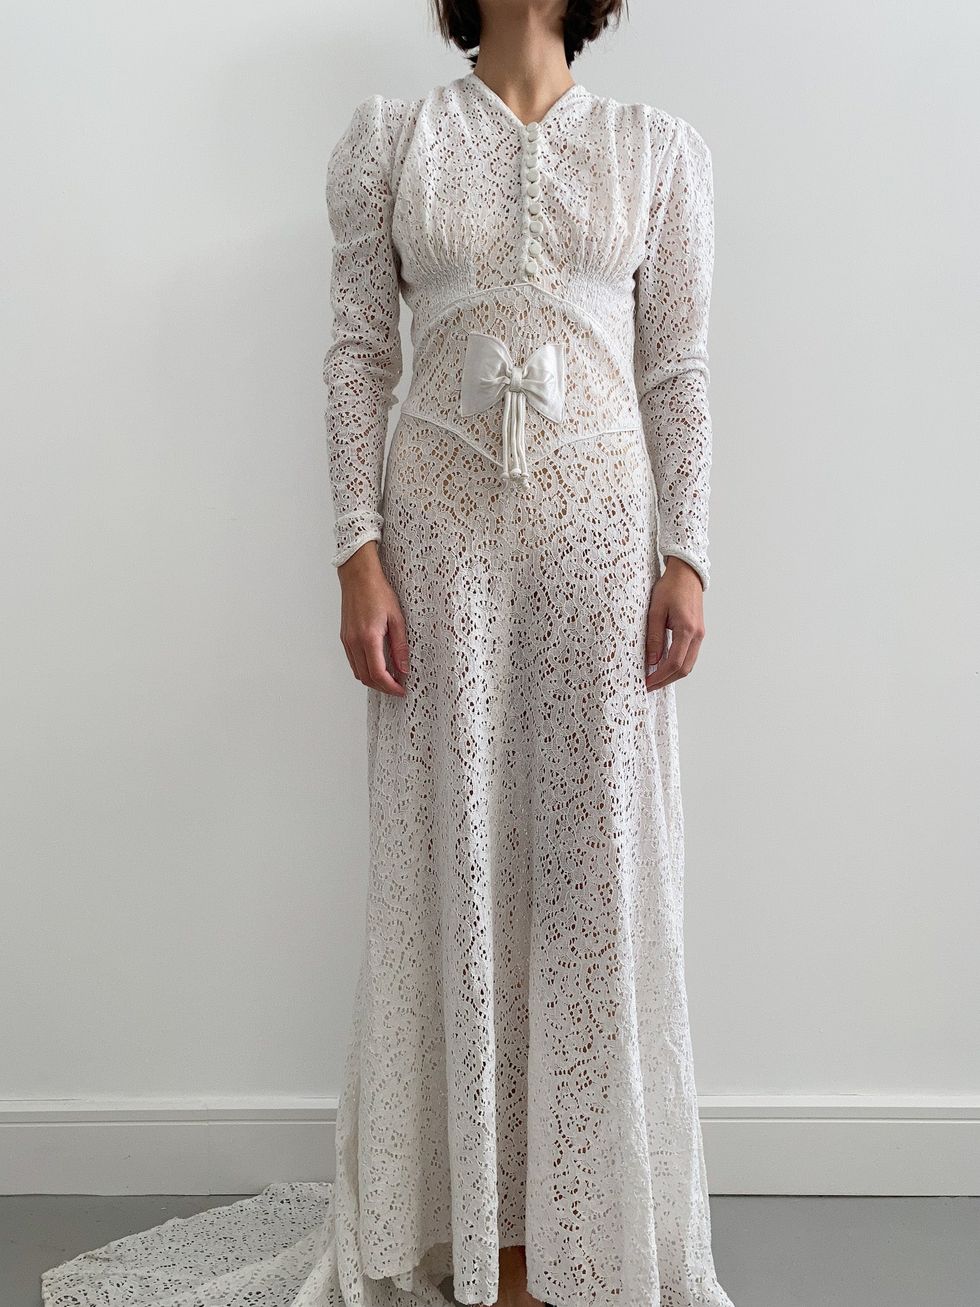 1940s Lace Wedding Dress - Size M/L